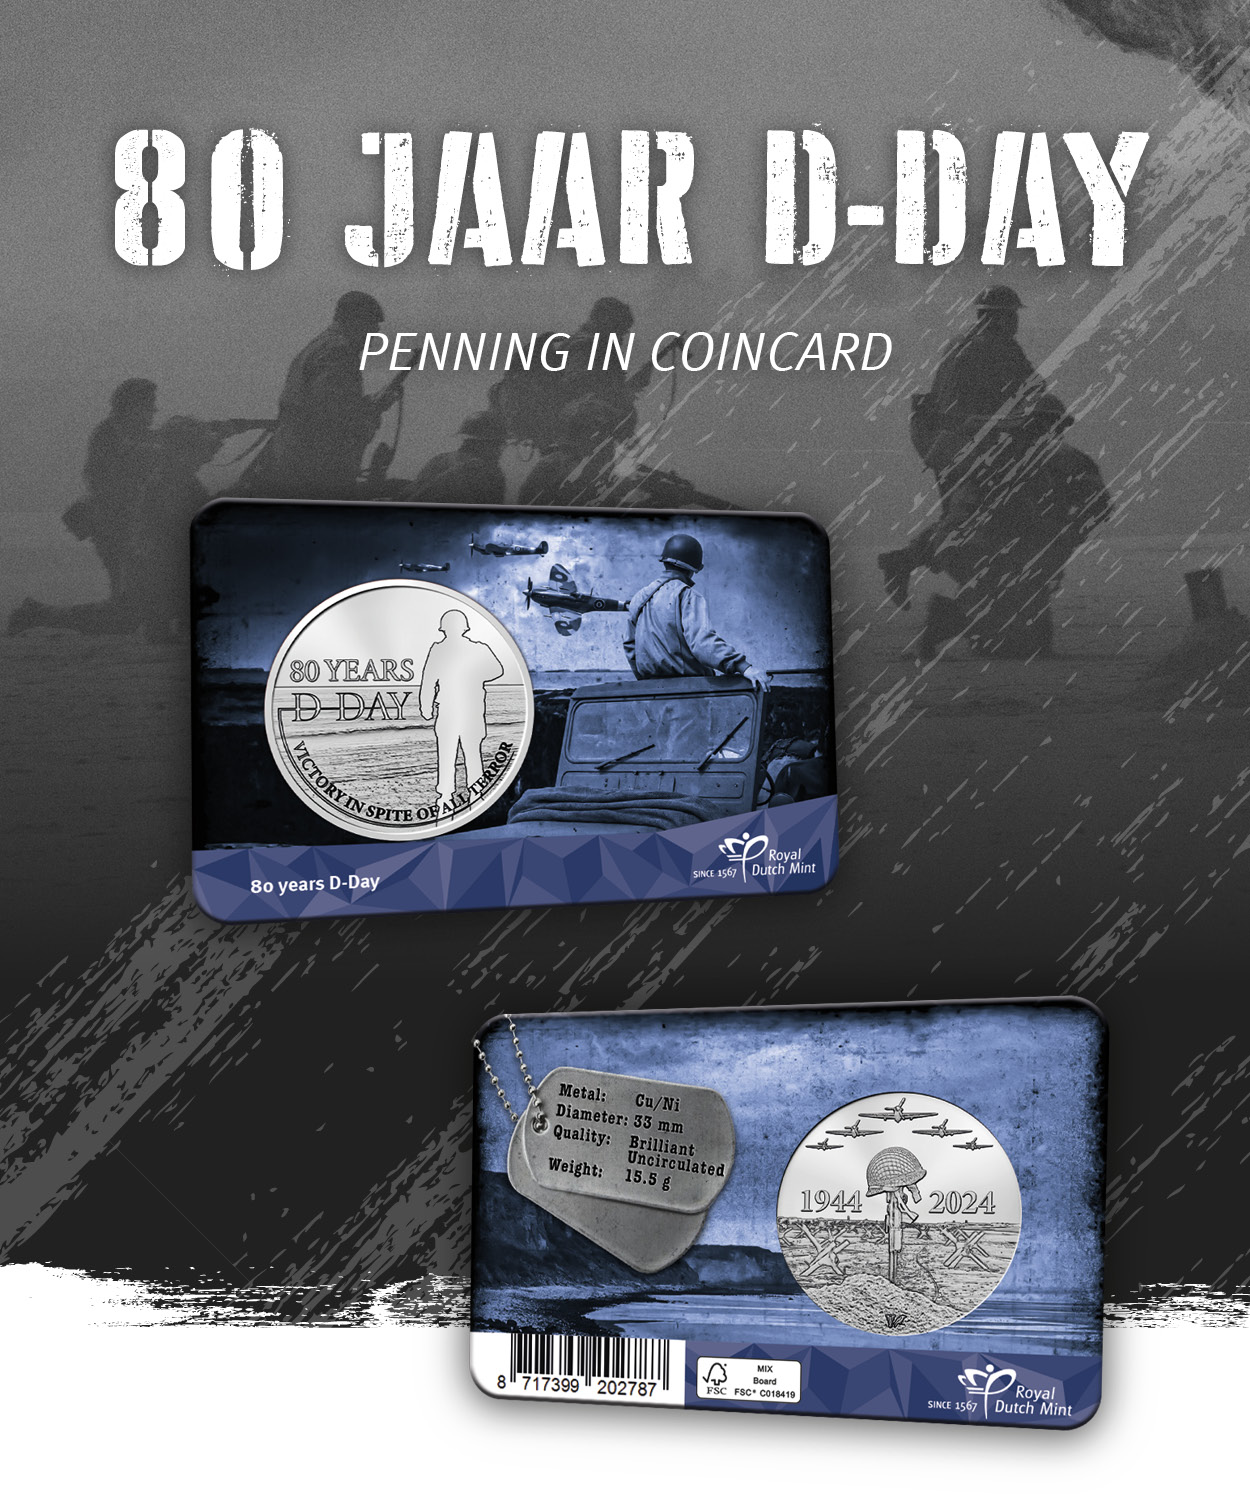 80 jaar D-day penning in coincard